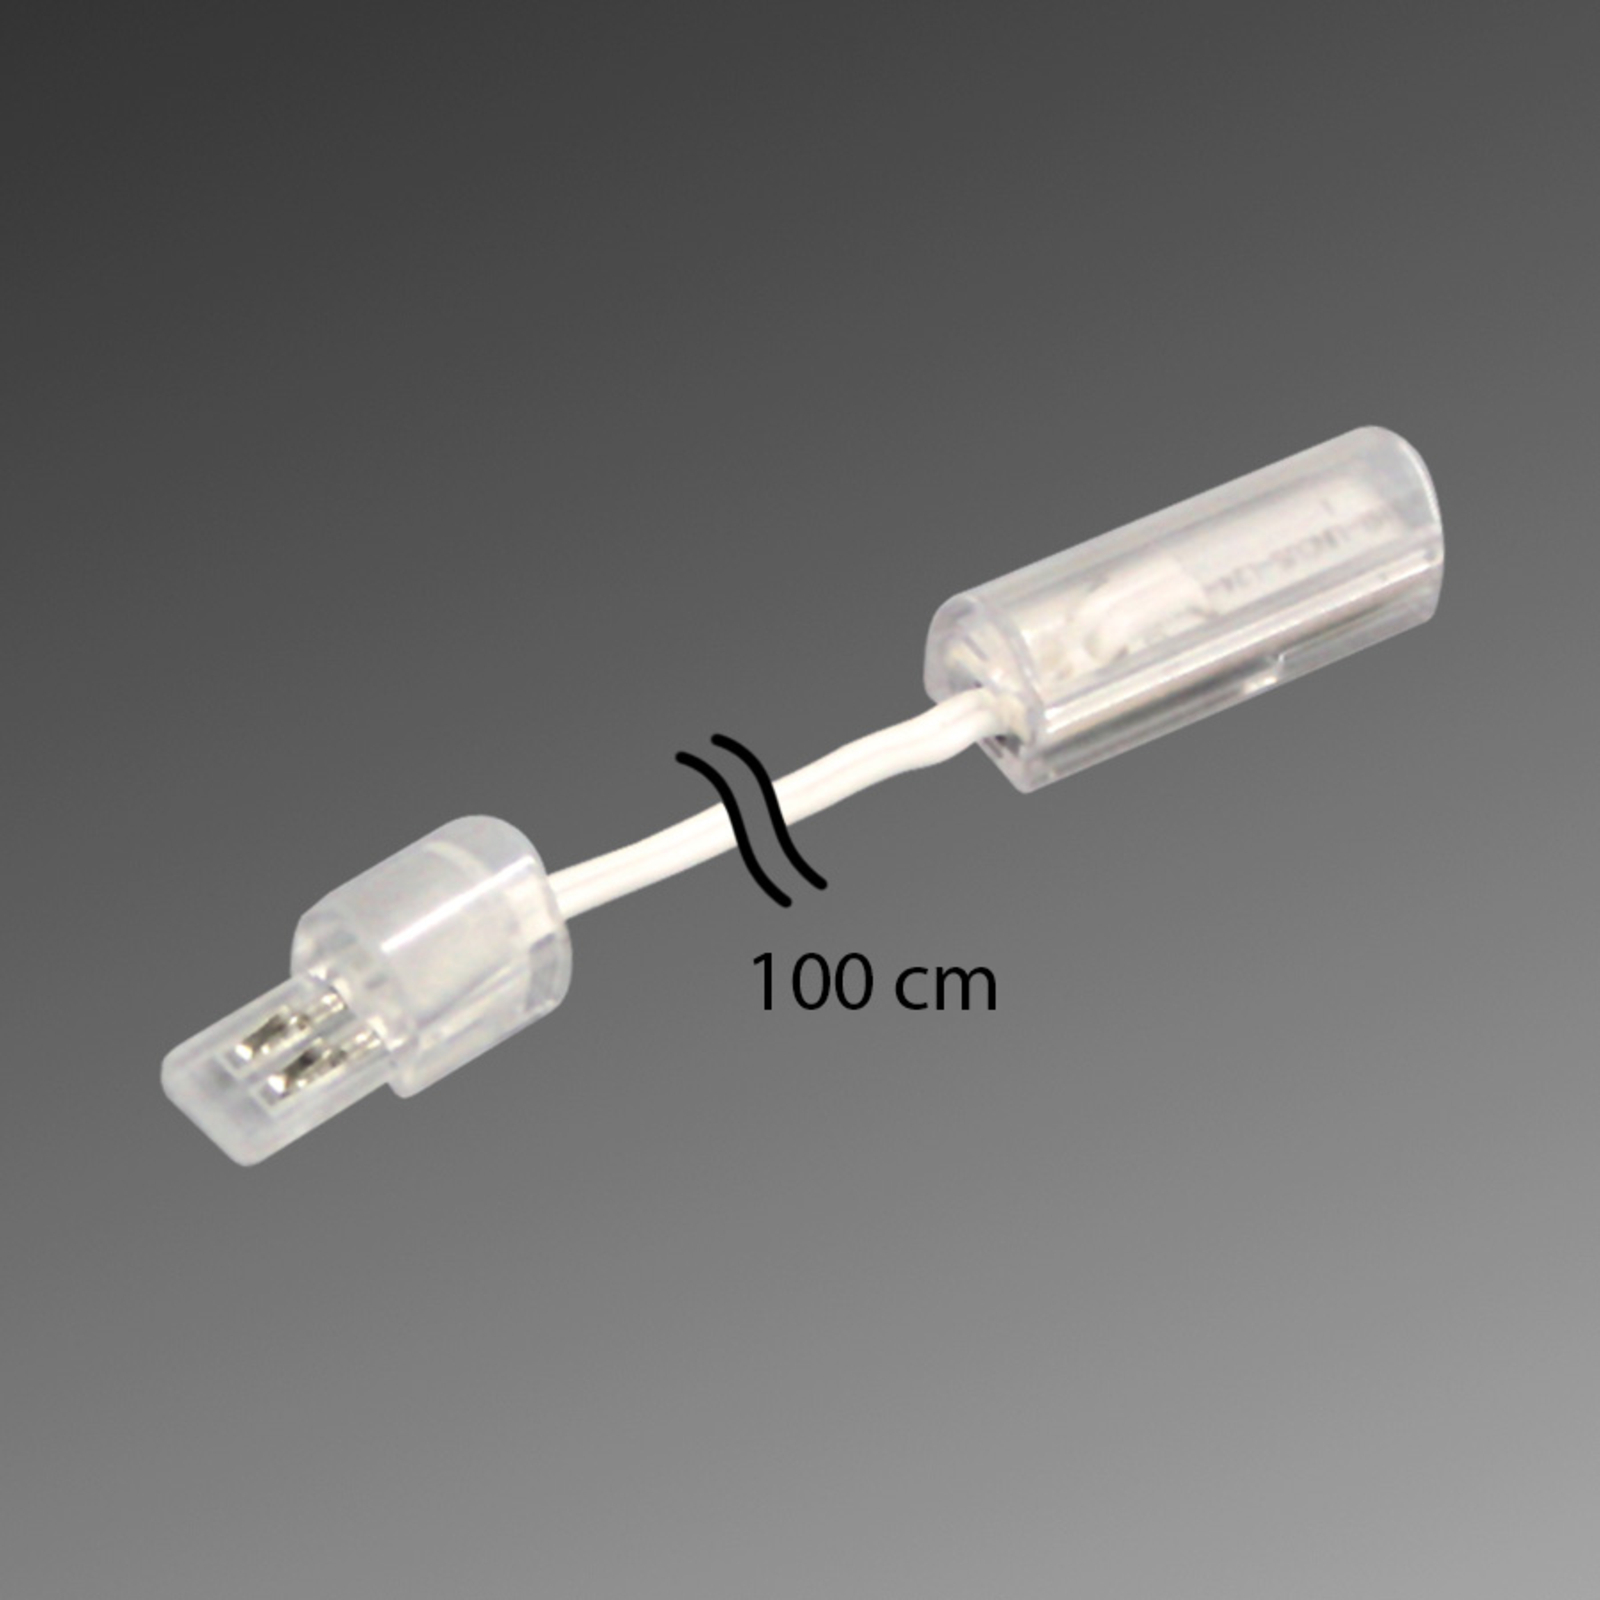 Verbindungsleitung für LED STICK 2, 100 cm